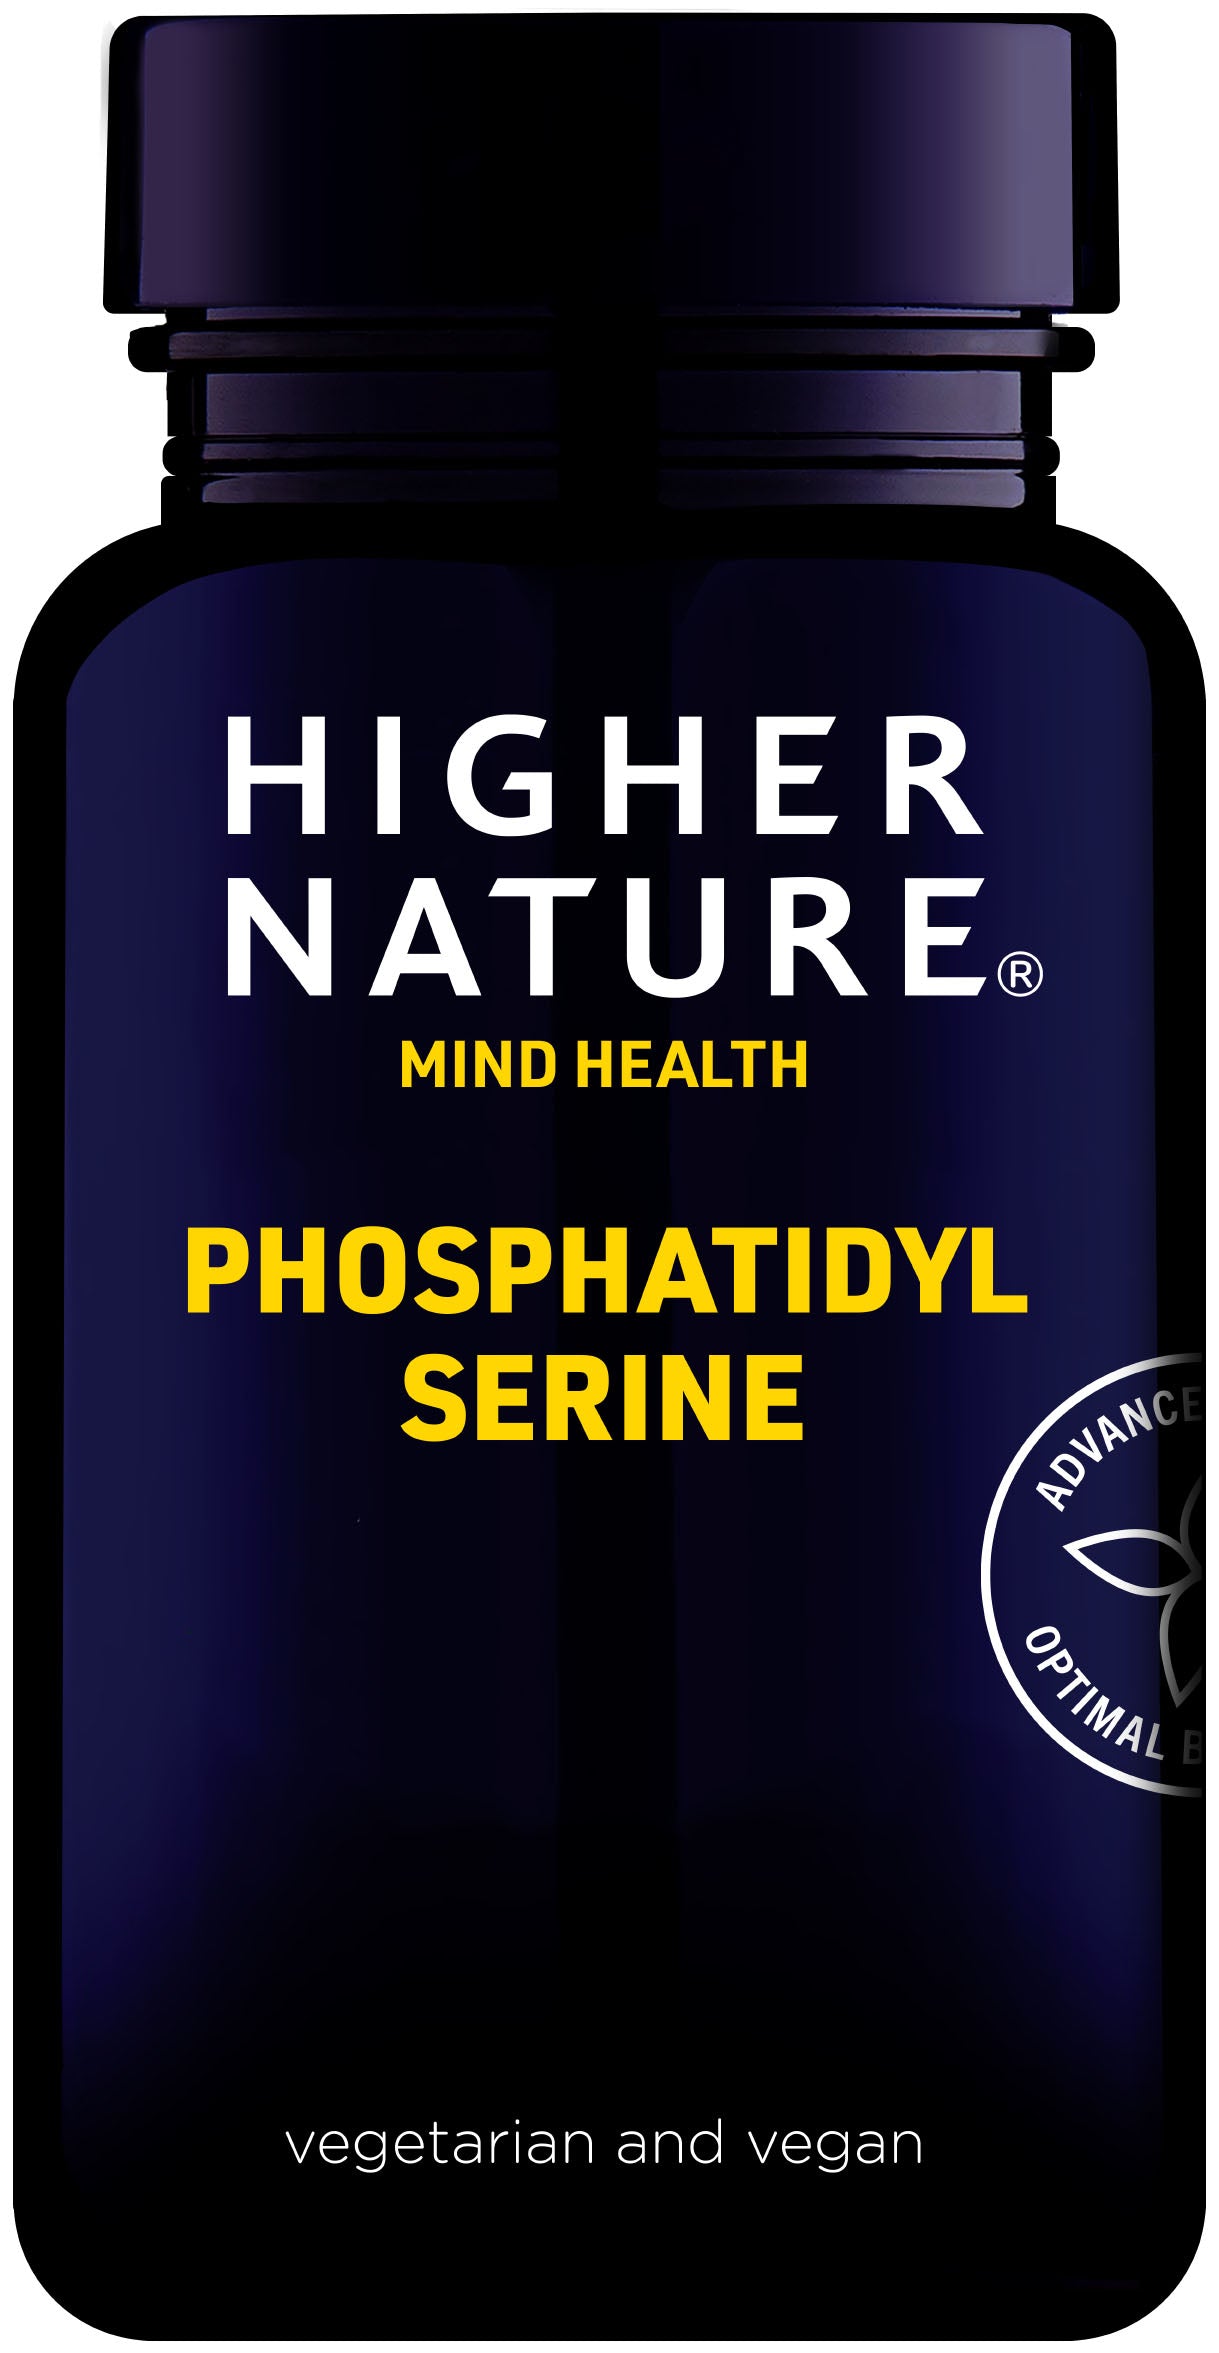 Higher Nature Phosphatidyl Serine 45's